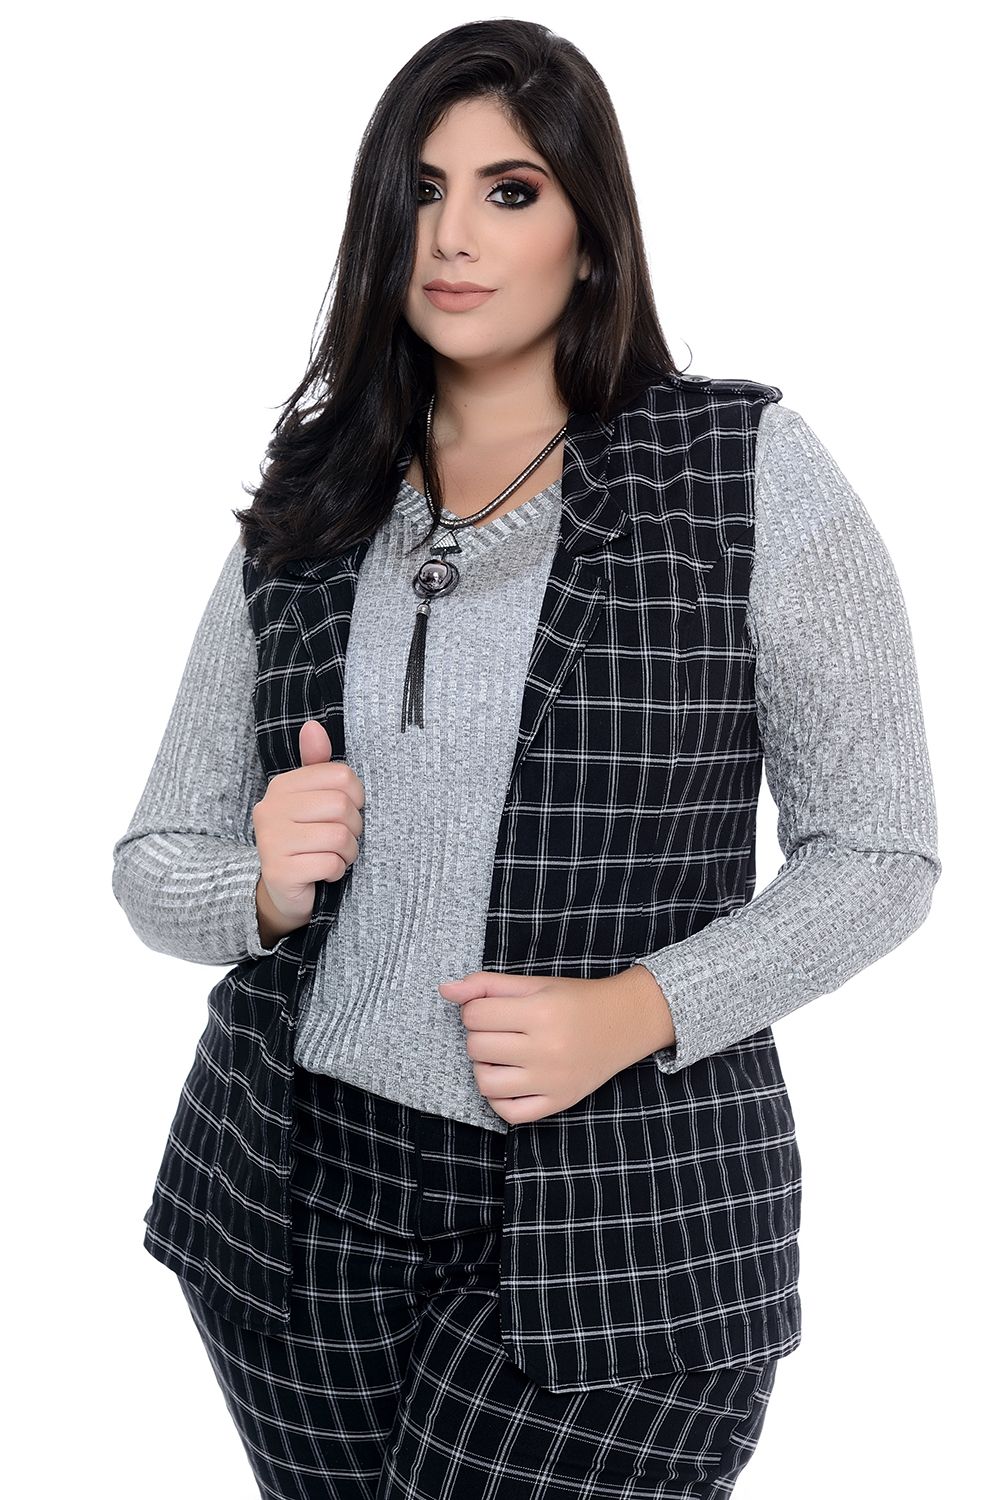 Fato xadrez feminino com cordões, camisa de colete, saia maxi